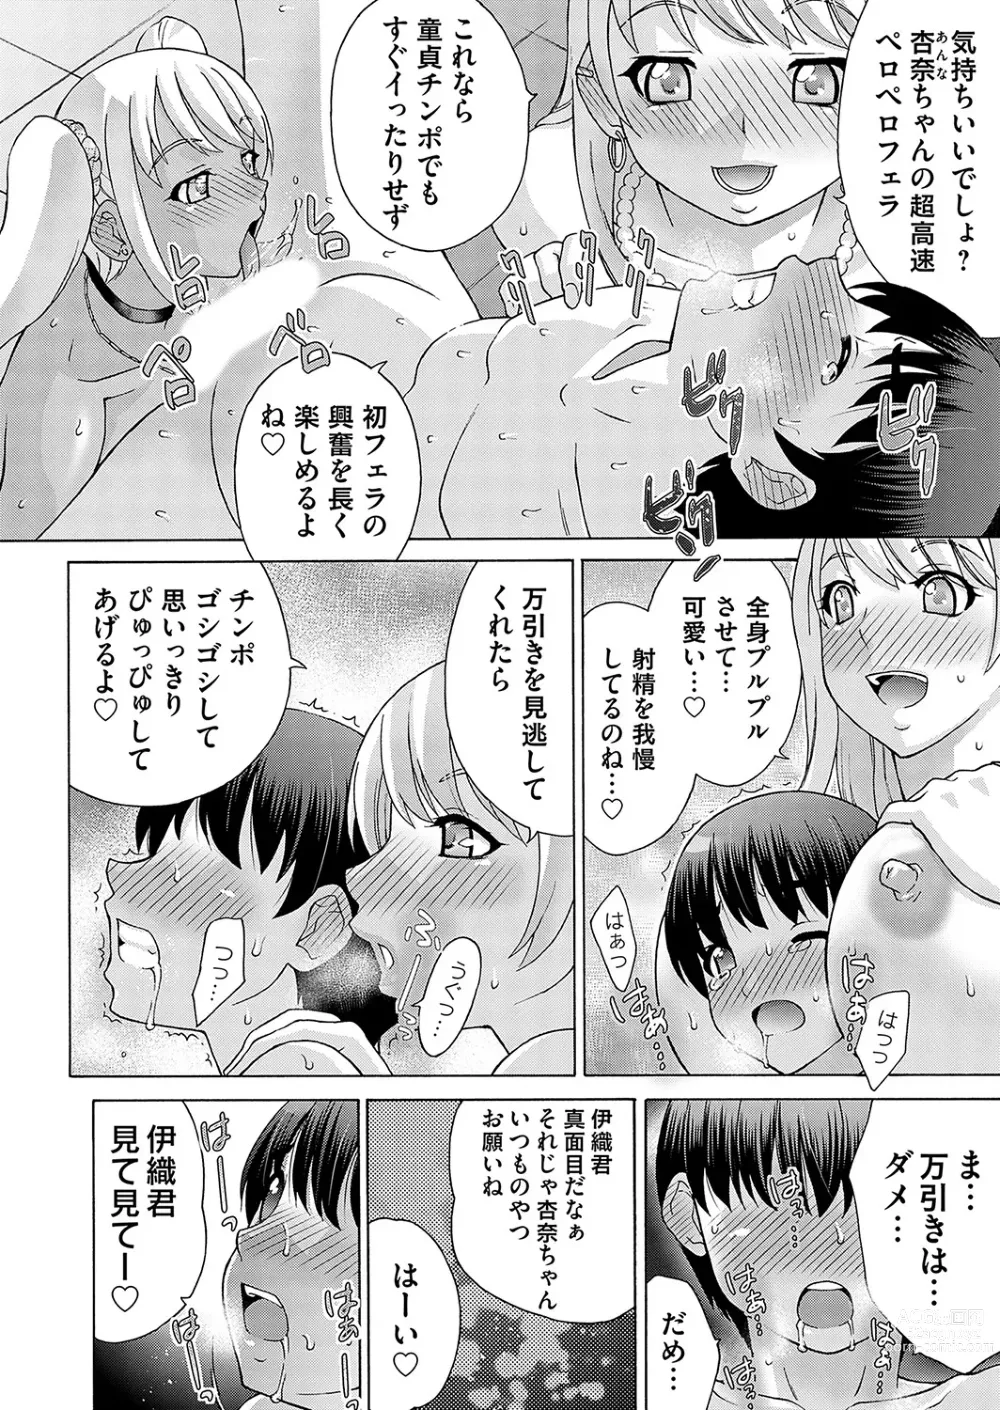 Page 171 of manga COMIC Magnum Vol. 169